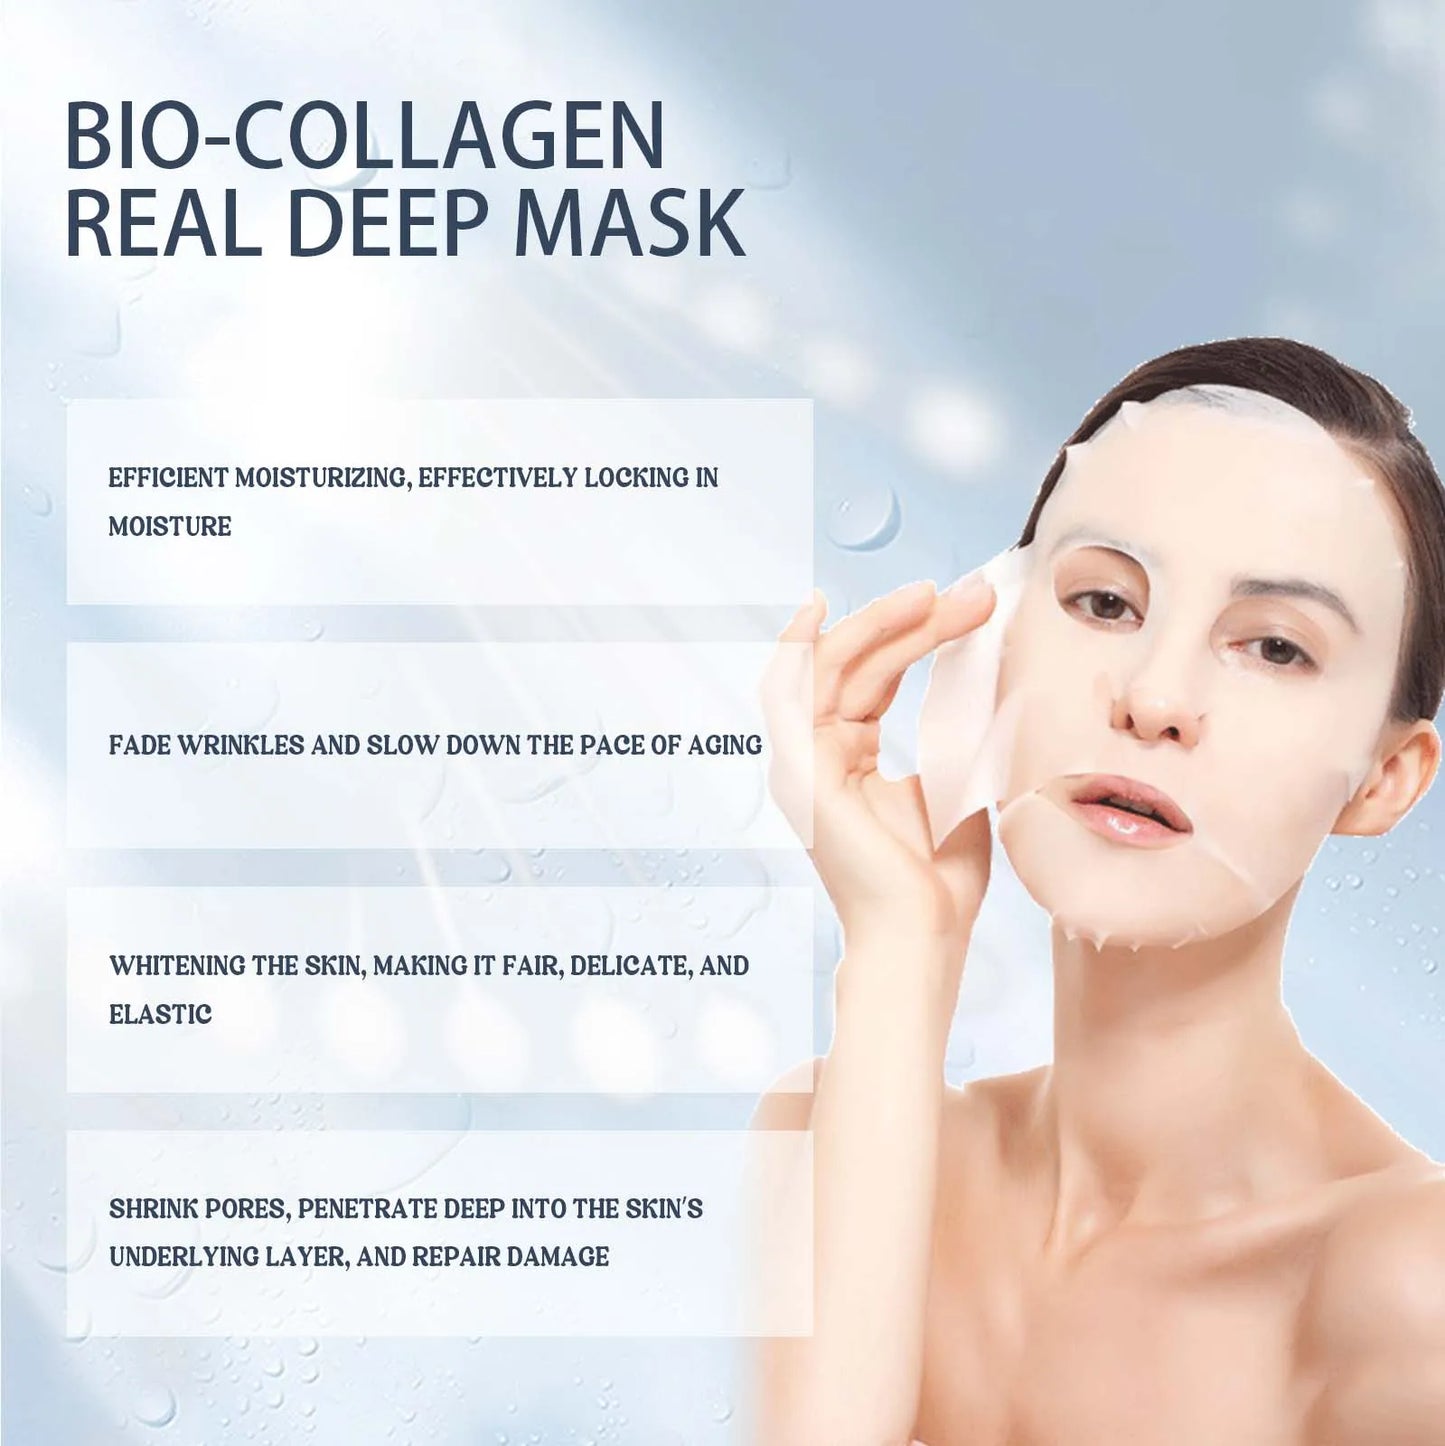 EELHOE Skin Care Collagen Face Mask Moisturizing Oil-Control Sheet Masks Hyaluronic Acid Face Masks Hydrating Skin Care Products